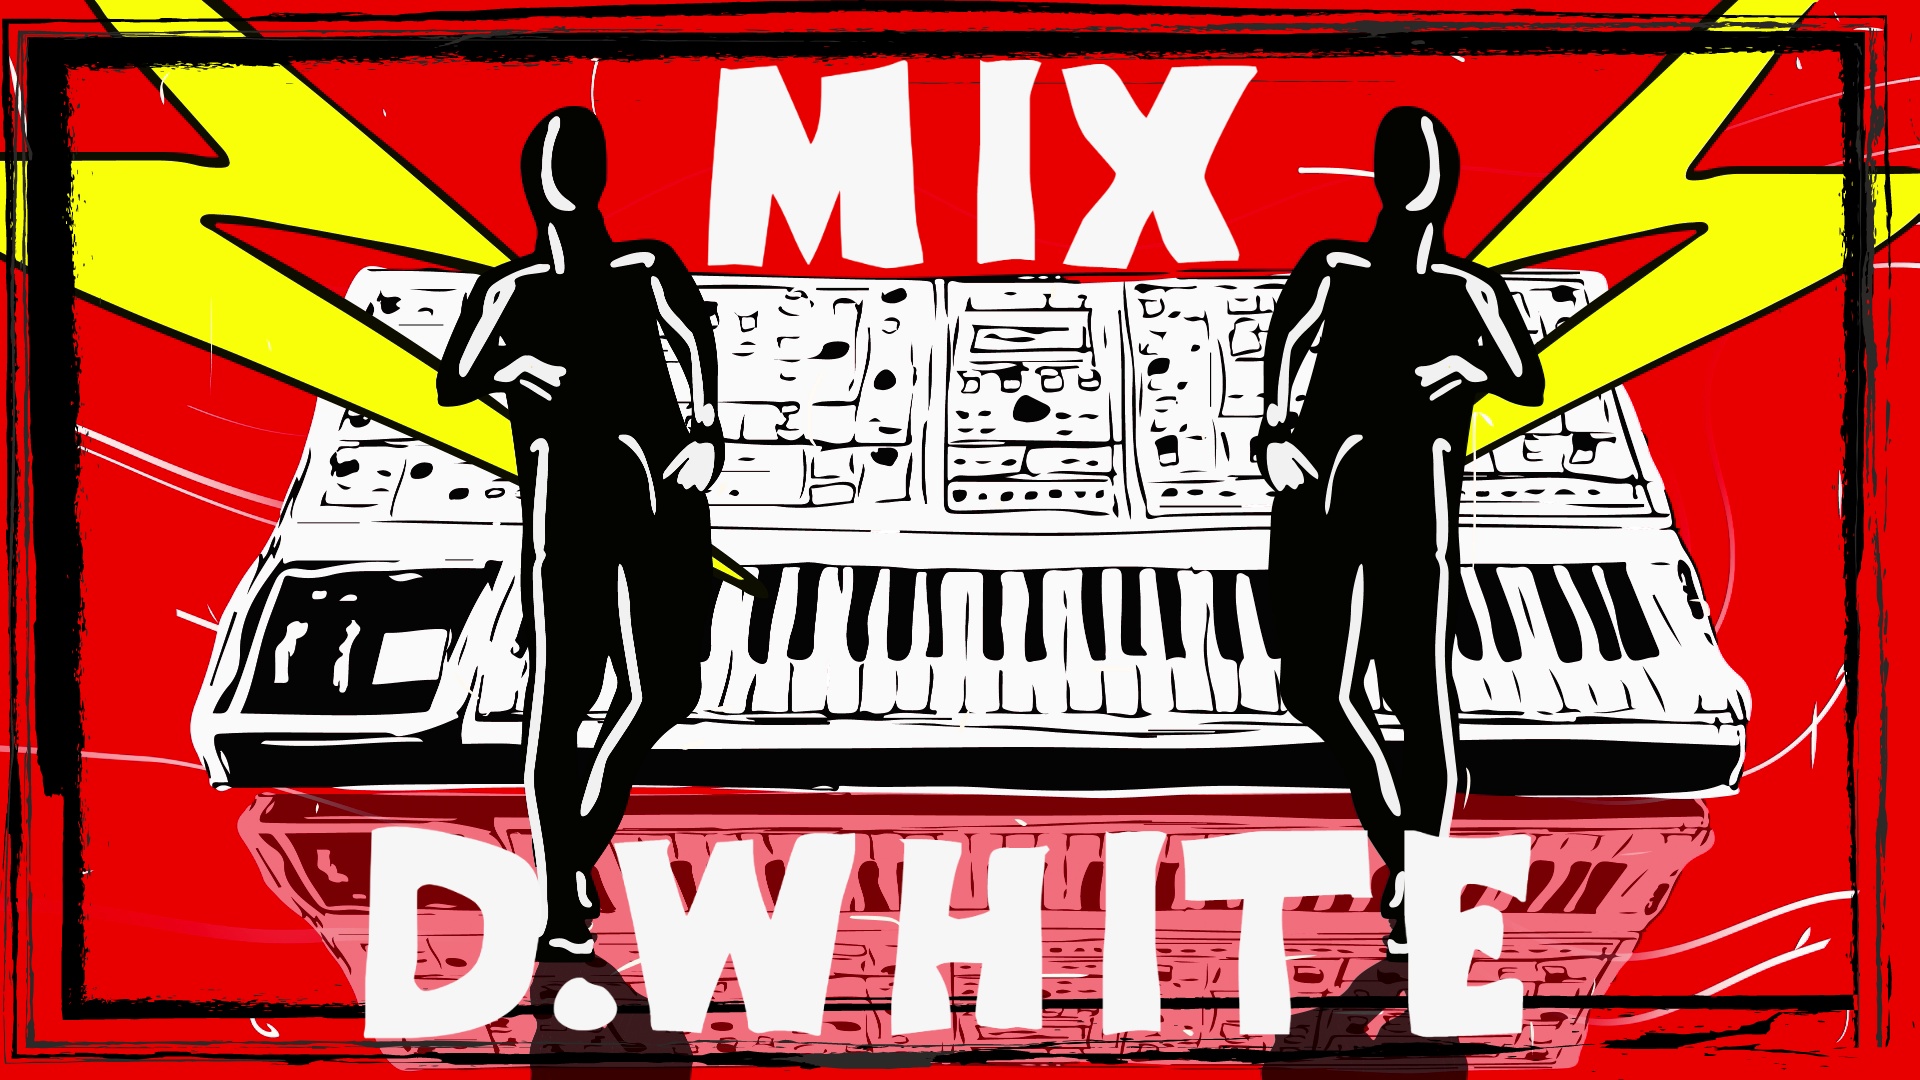 D.WHITE - Non Stop Mix. NEW Italo Disco, Euro Dance, Музыка в стиле 80-90 х, Любимые песни